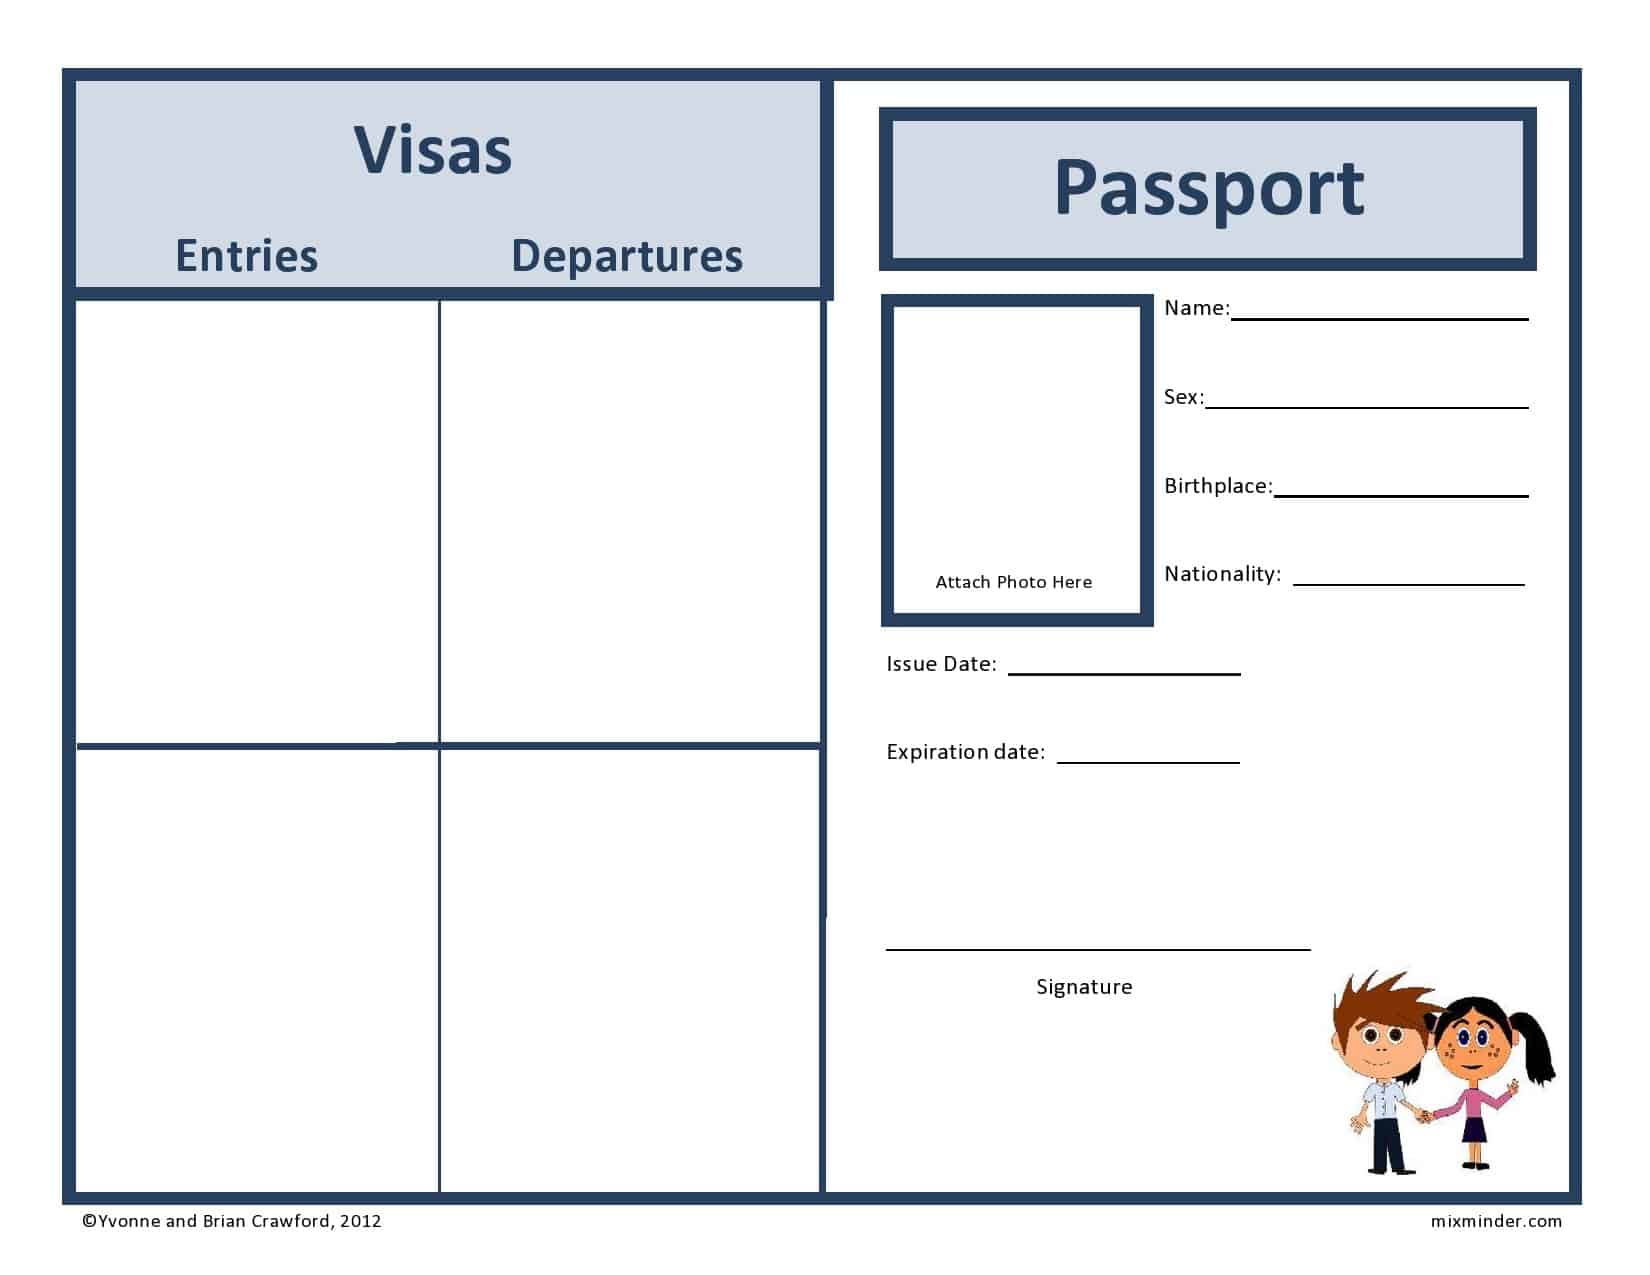 passport-photo-studio-1-5-1-download-free-moreper